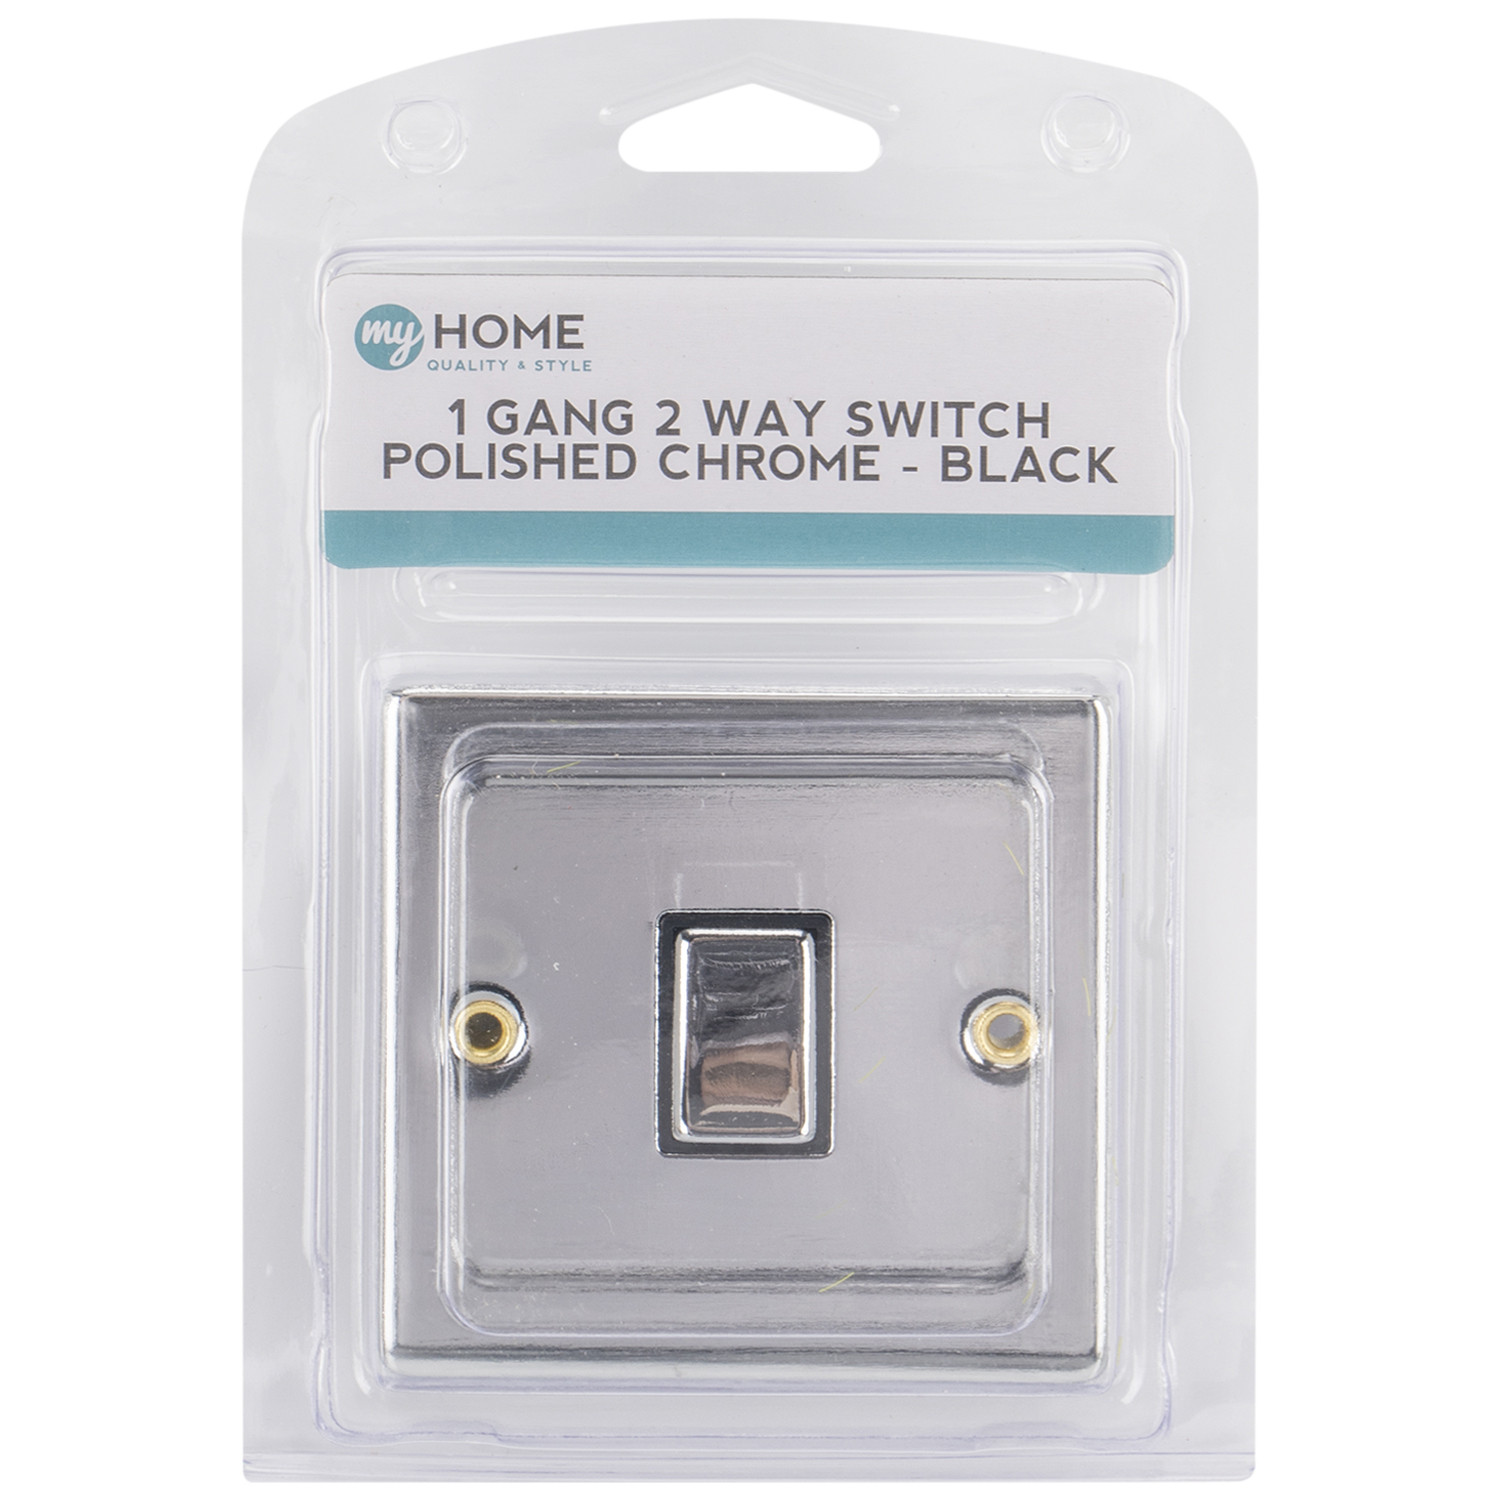 My Home 1 Gang 2 Way Polished Chrome Light Switch Image